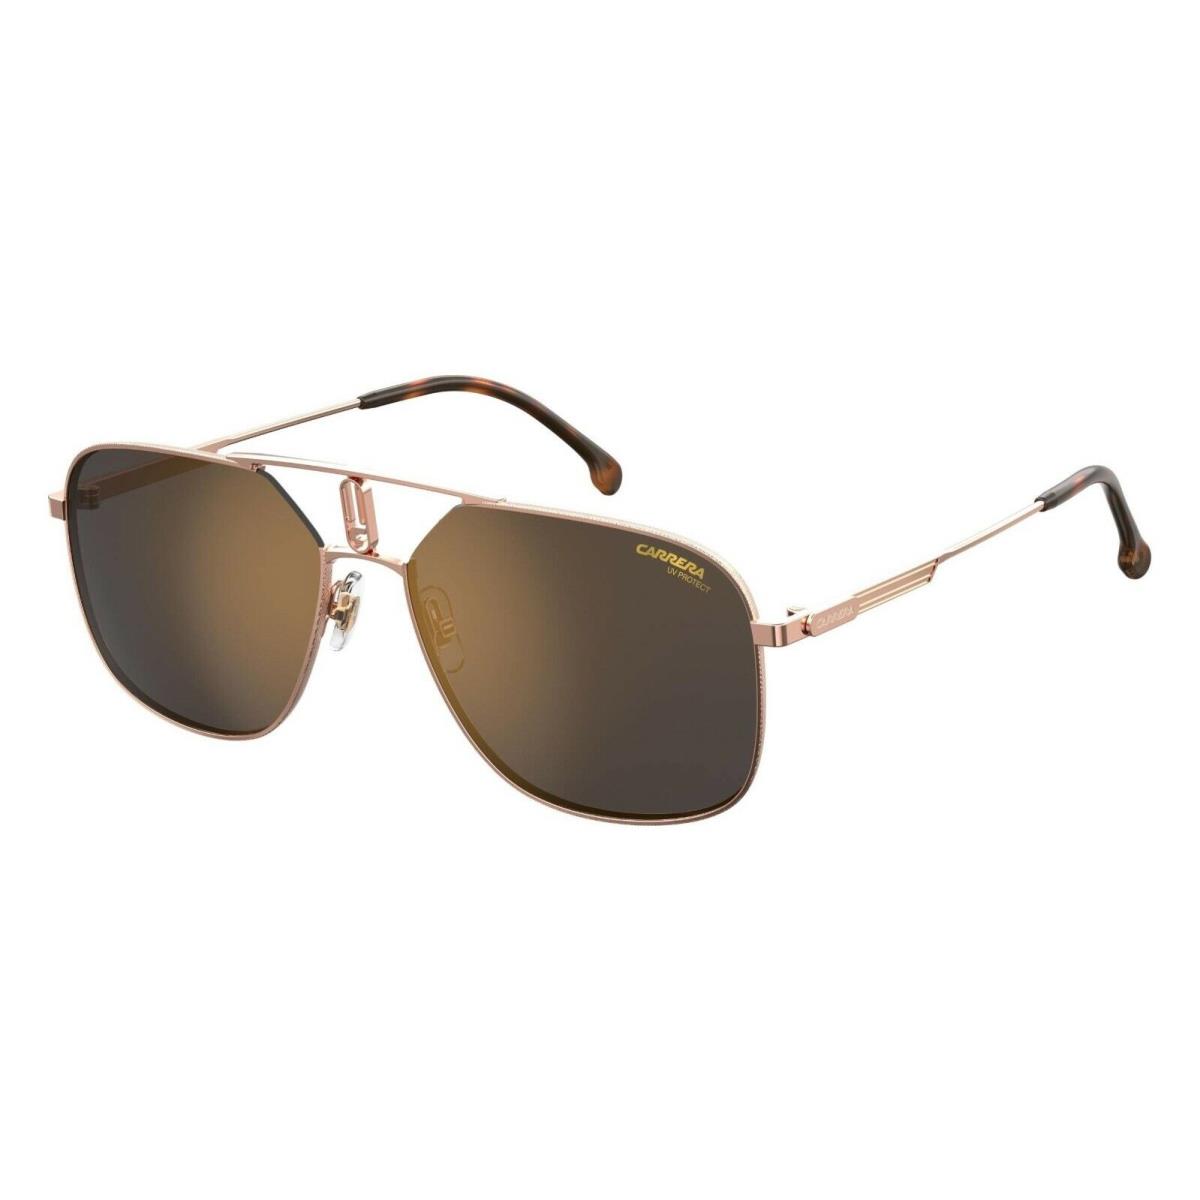 Carrera Sunglasses 1024/S 0DDB JO Gold Copper Black/ Grey Gold Mirror Lens